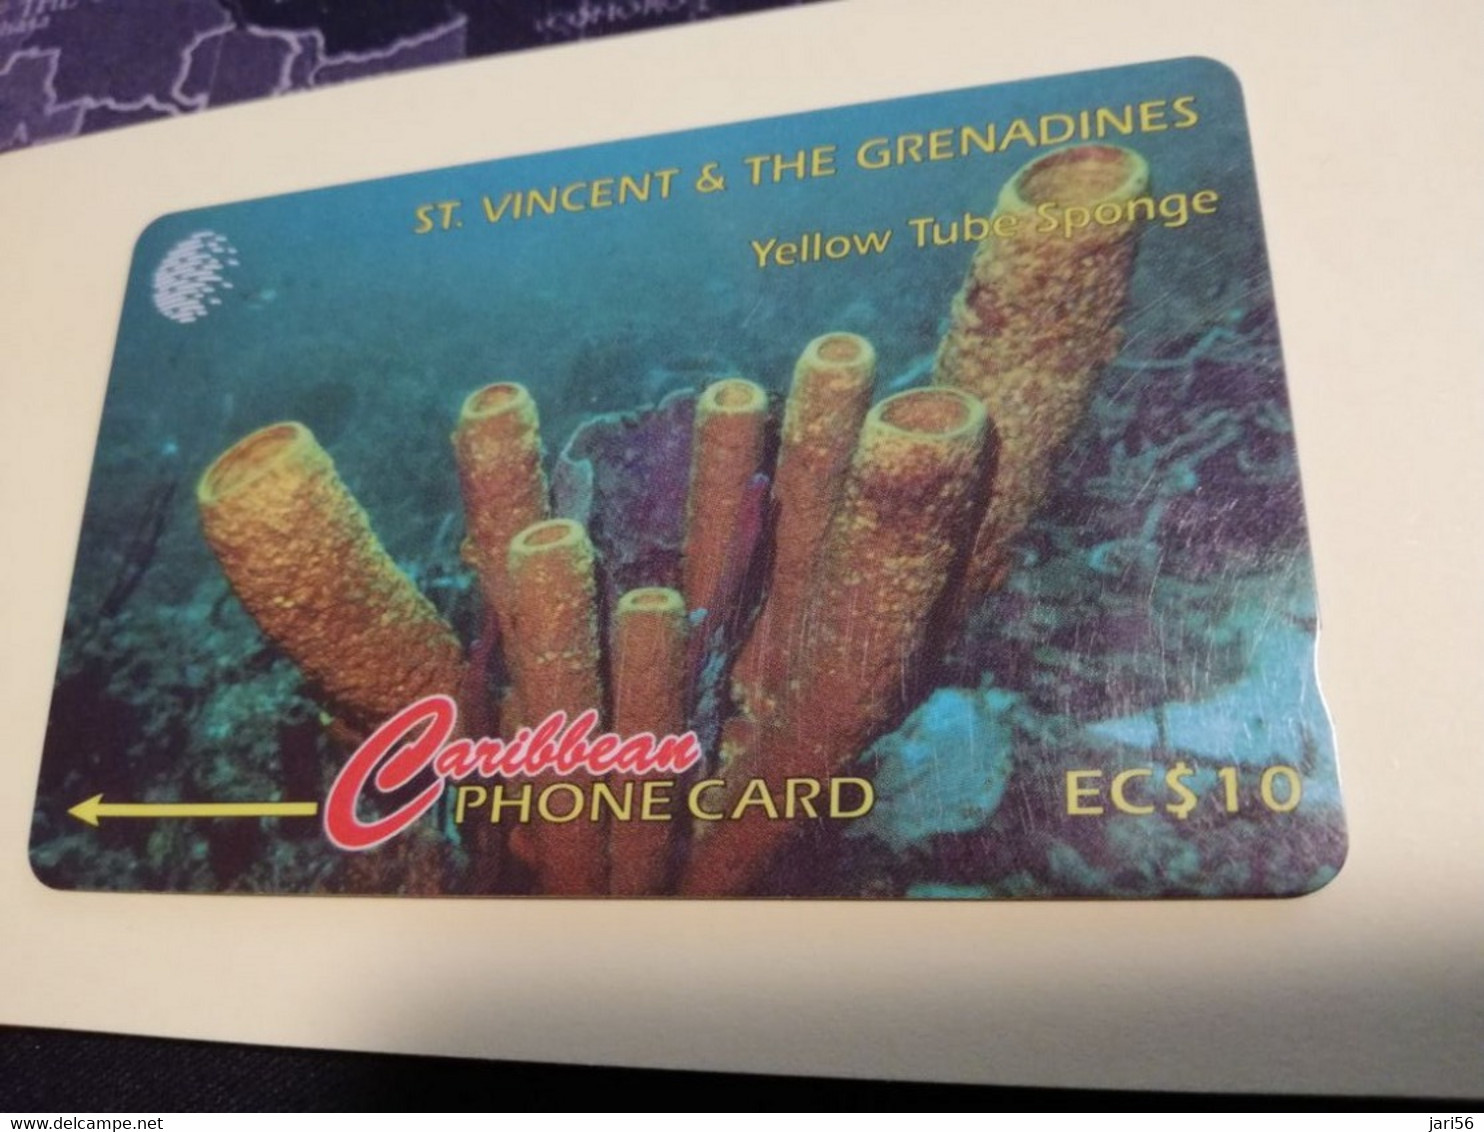 ST VINCENT & GRENADINES  GPT CARD   $ 10,- 52CSVF  YELLOW TUBE SPONGE             C&W    Fine Used  Card  **3380** - San Vicente Y Las Granadinas